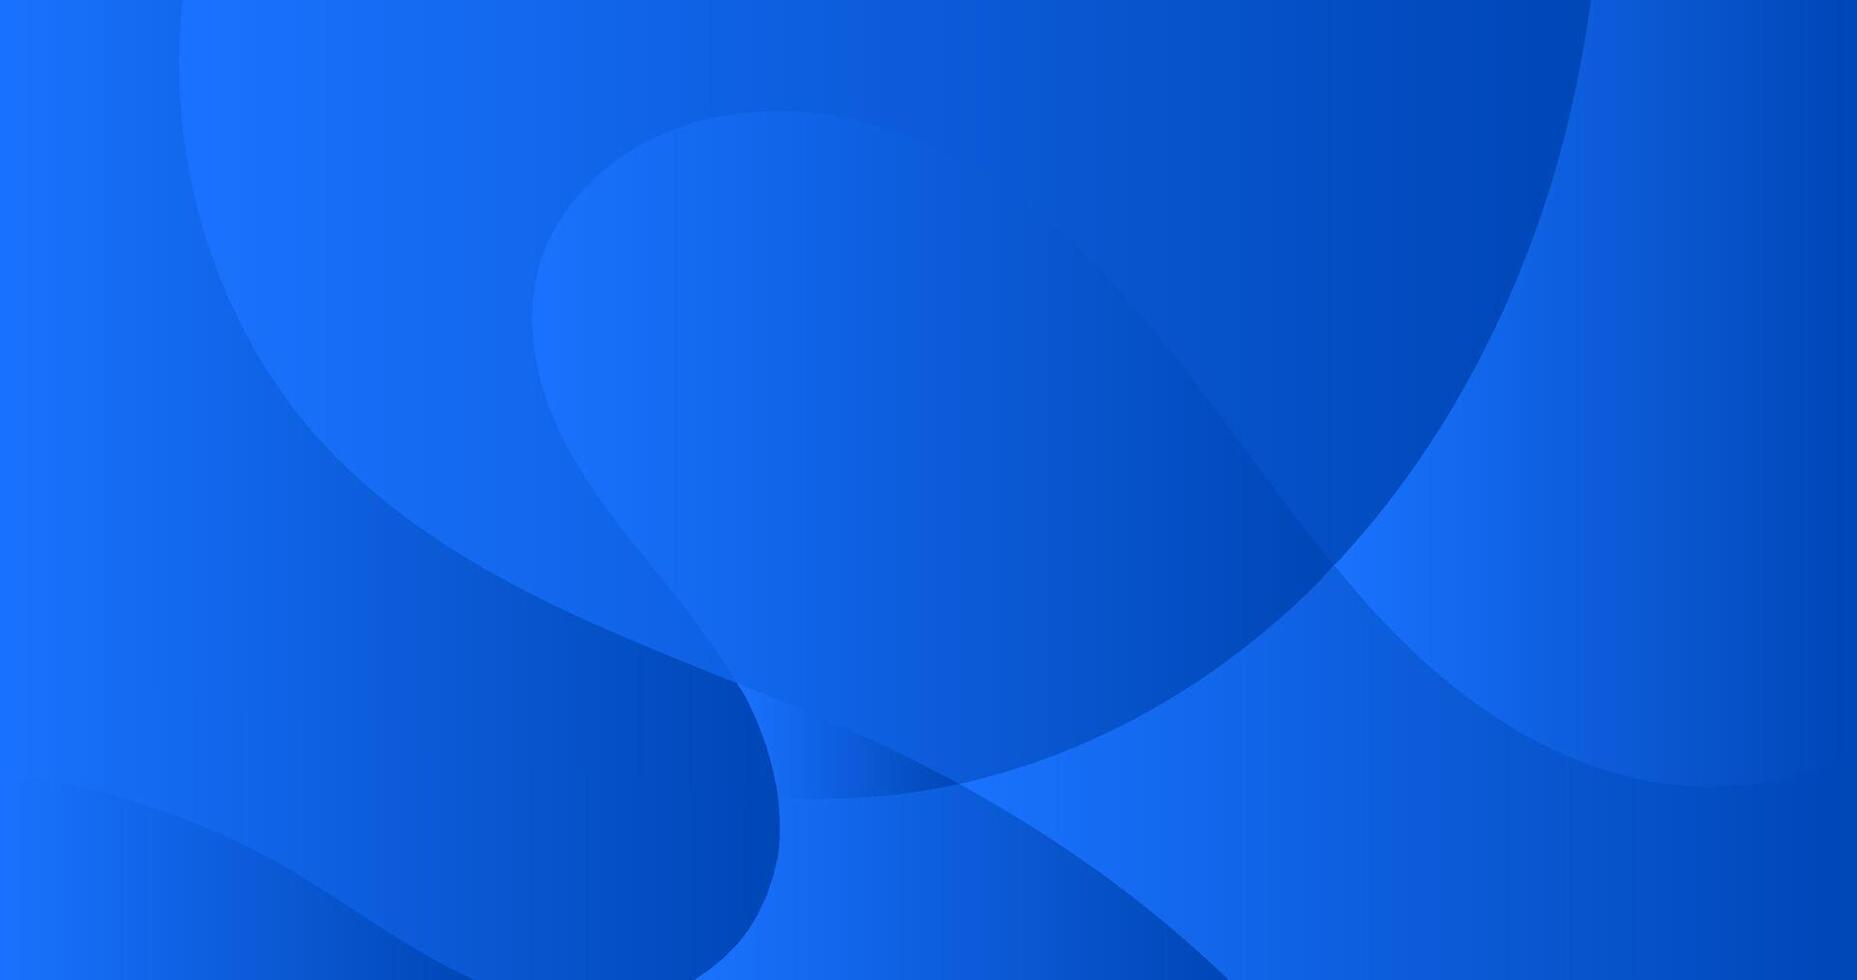 abstract elegant gradient blue background. vector illustration